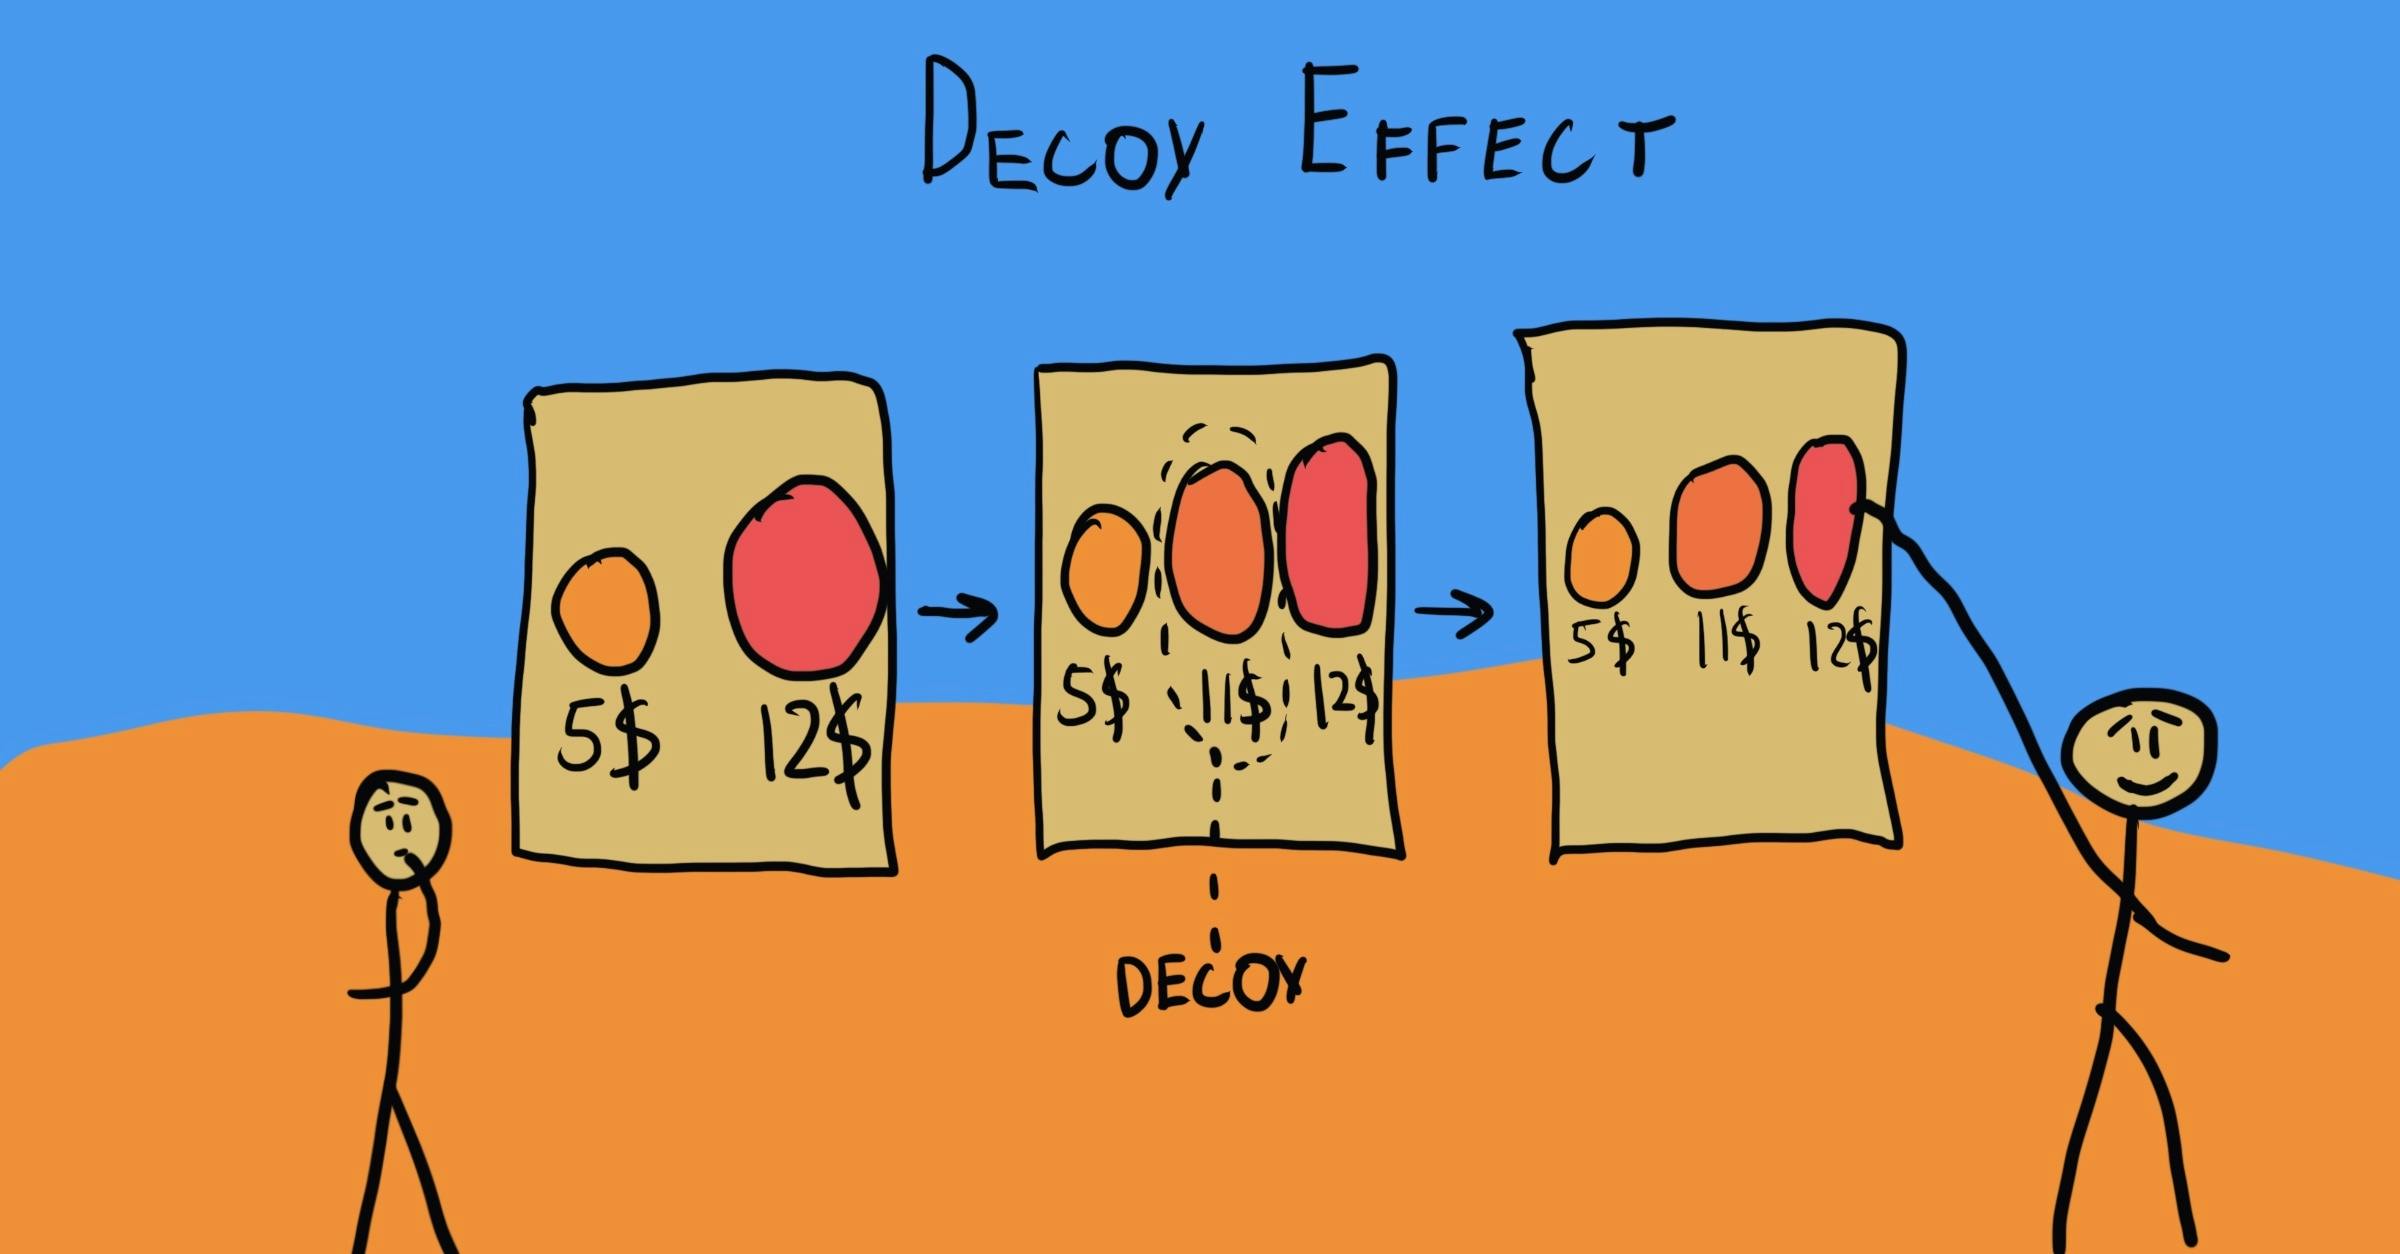 Decoy effect illustration